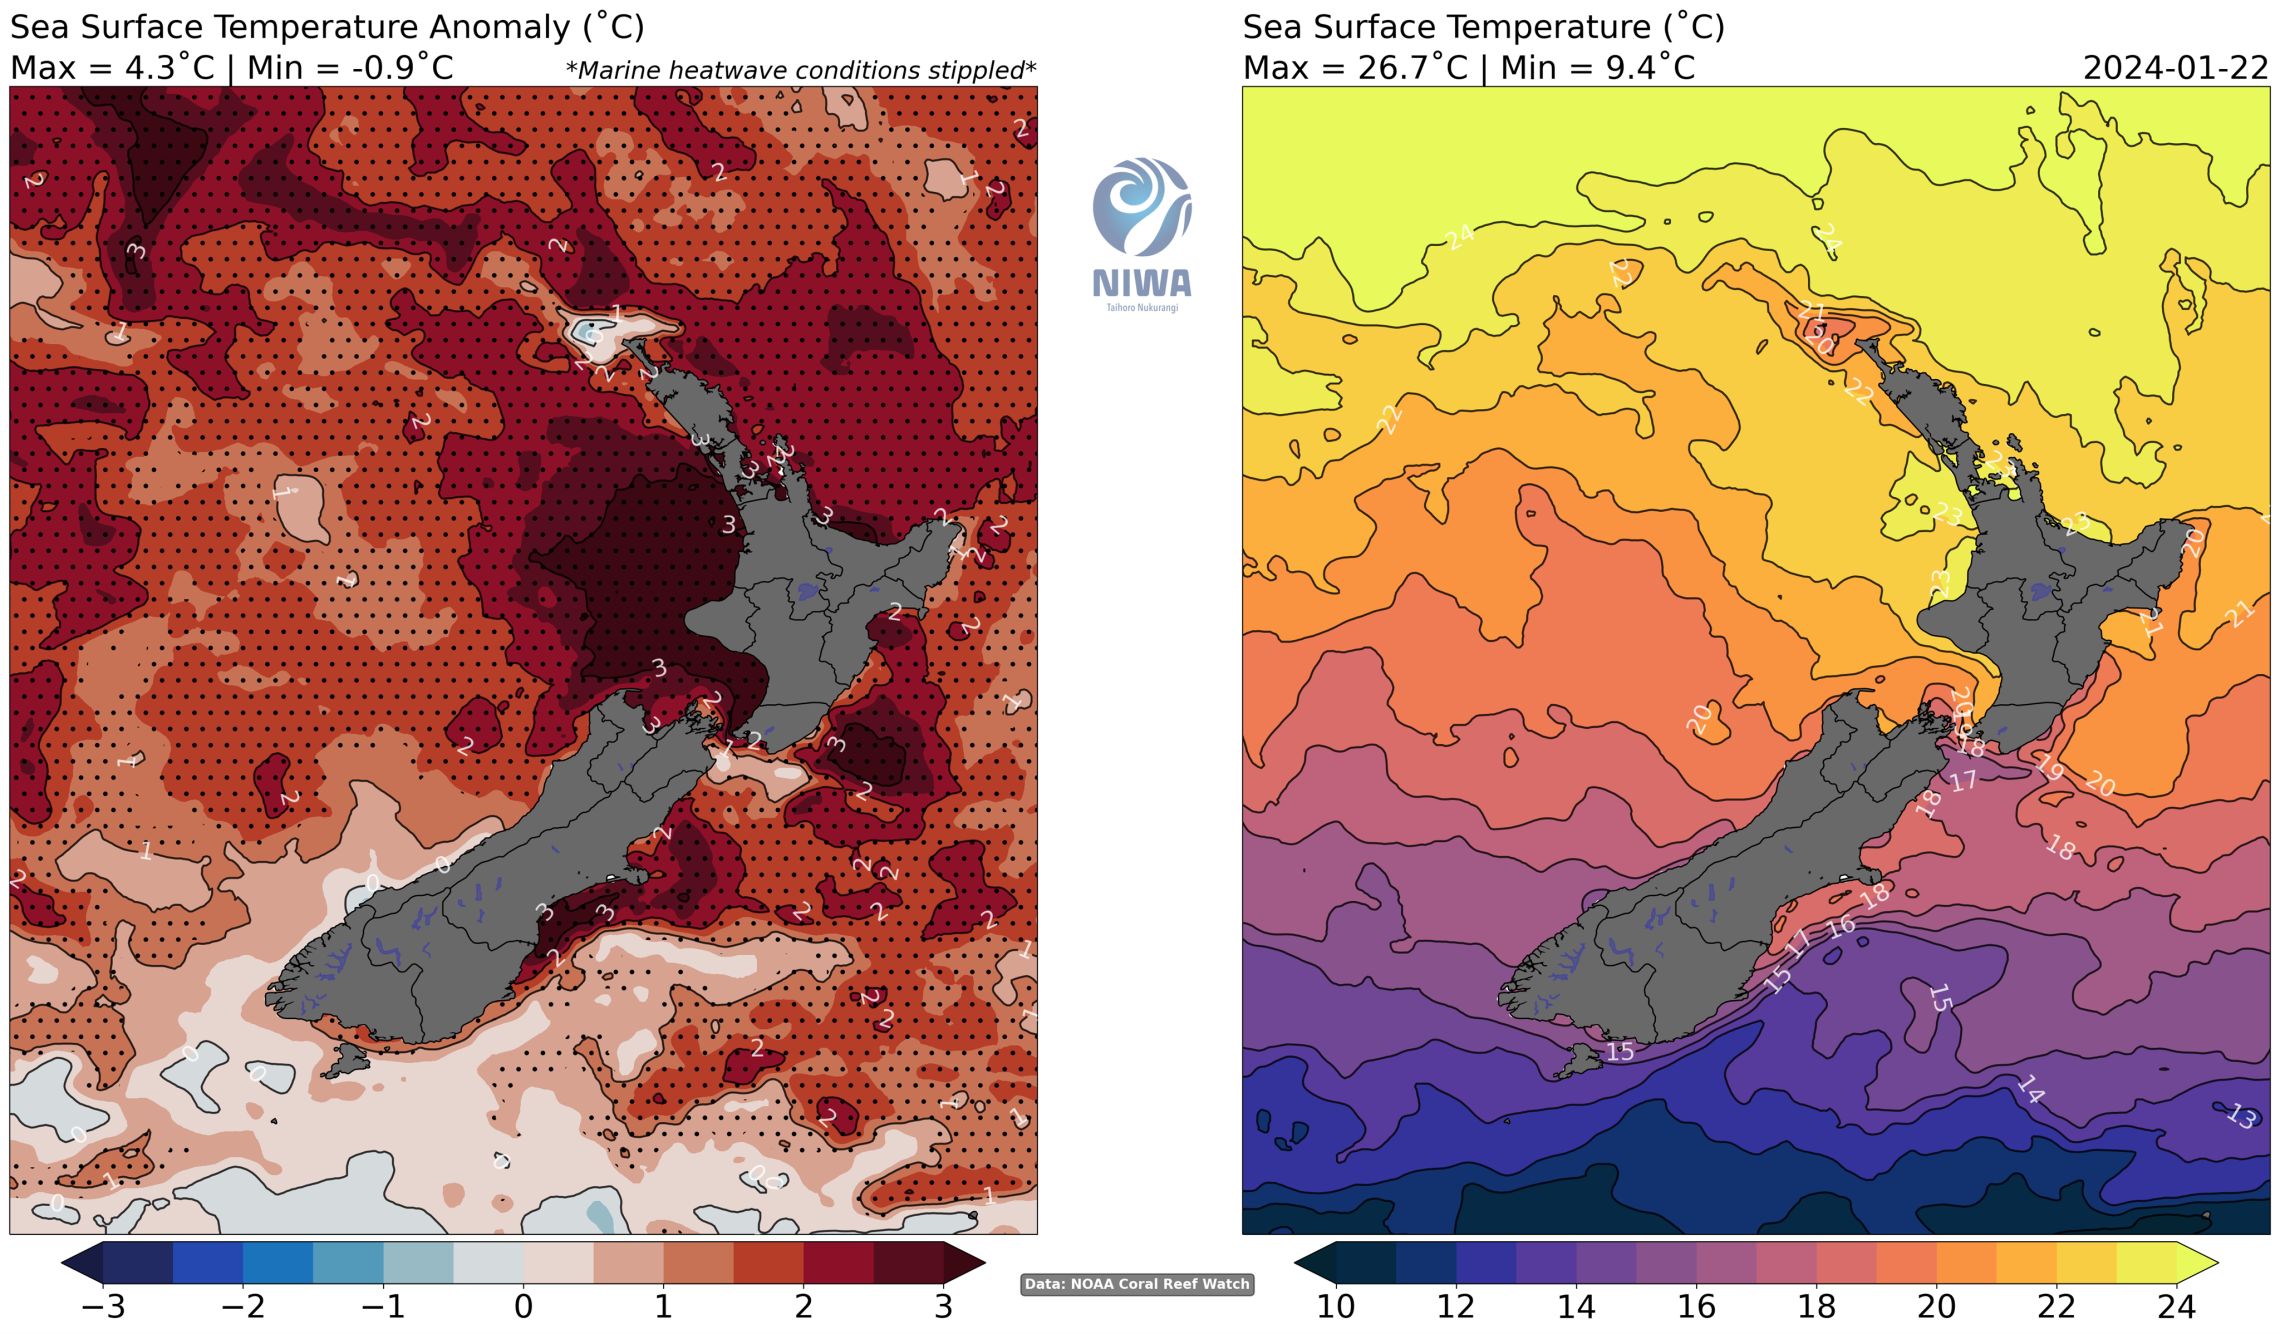 Sea surface temperature anomaly vs. sea surface temperature (˚C)